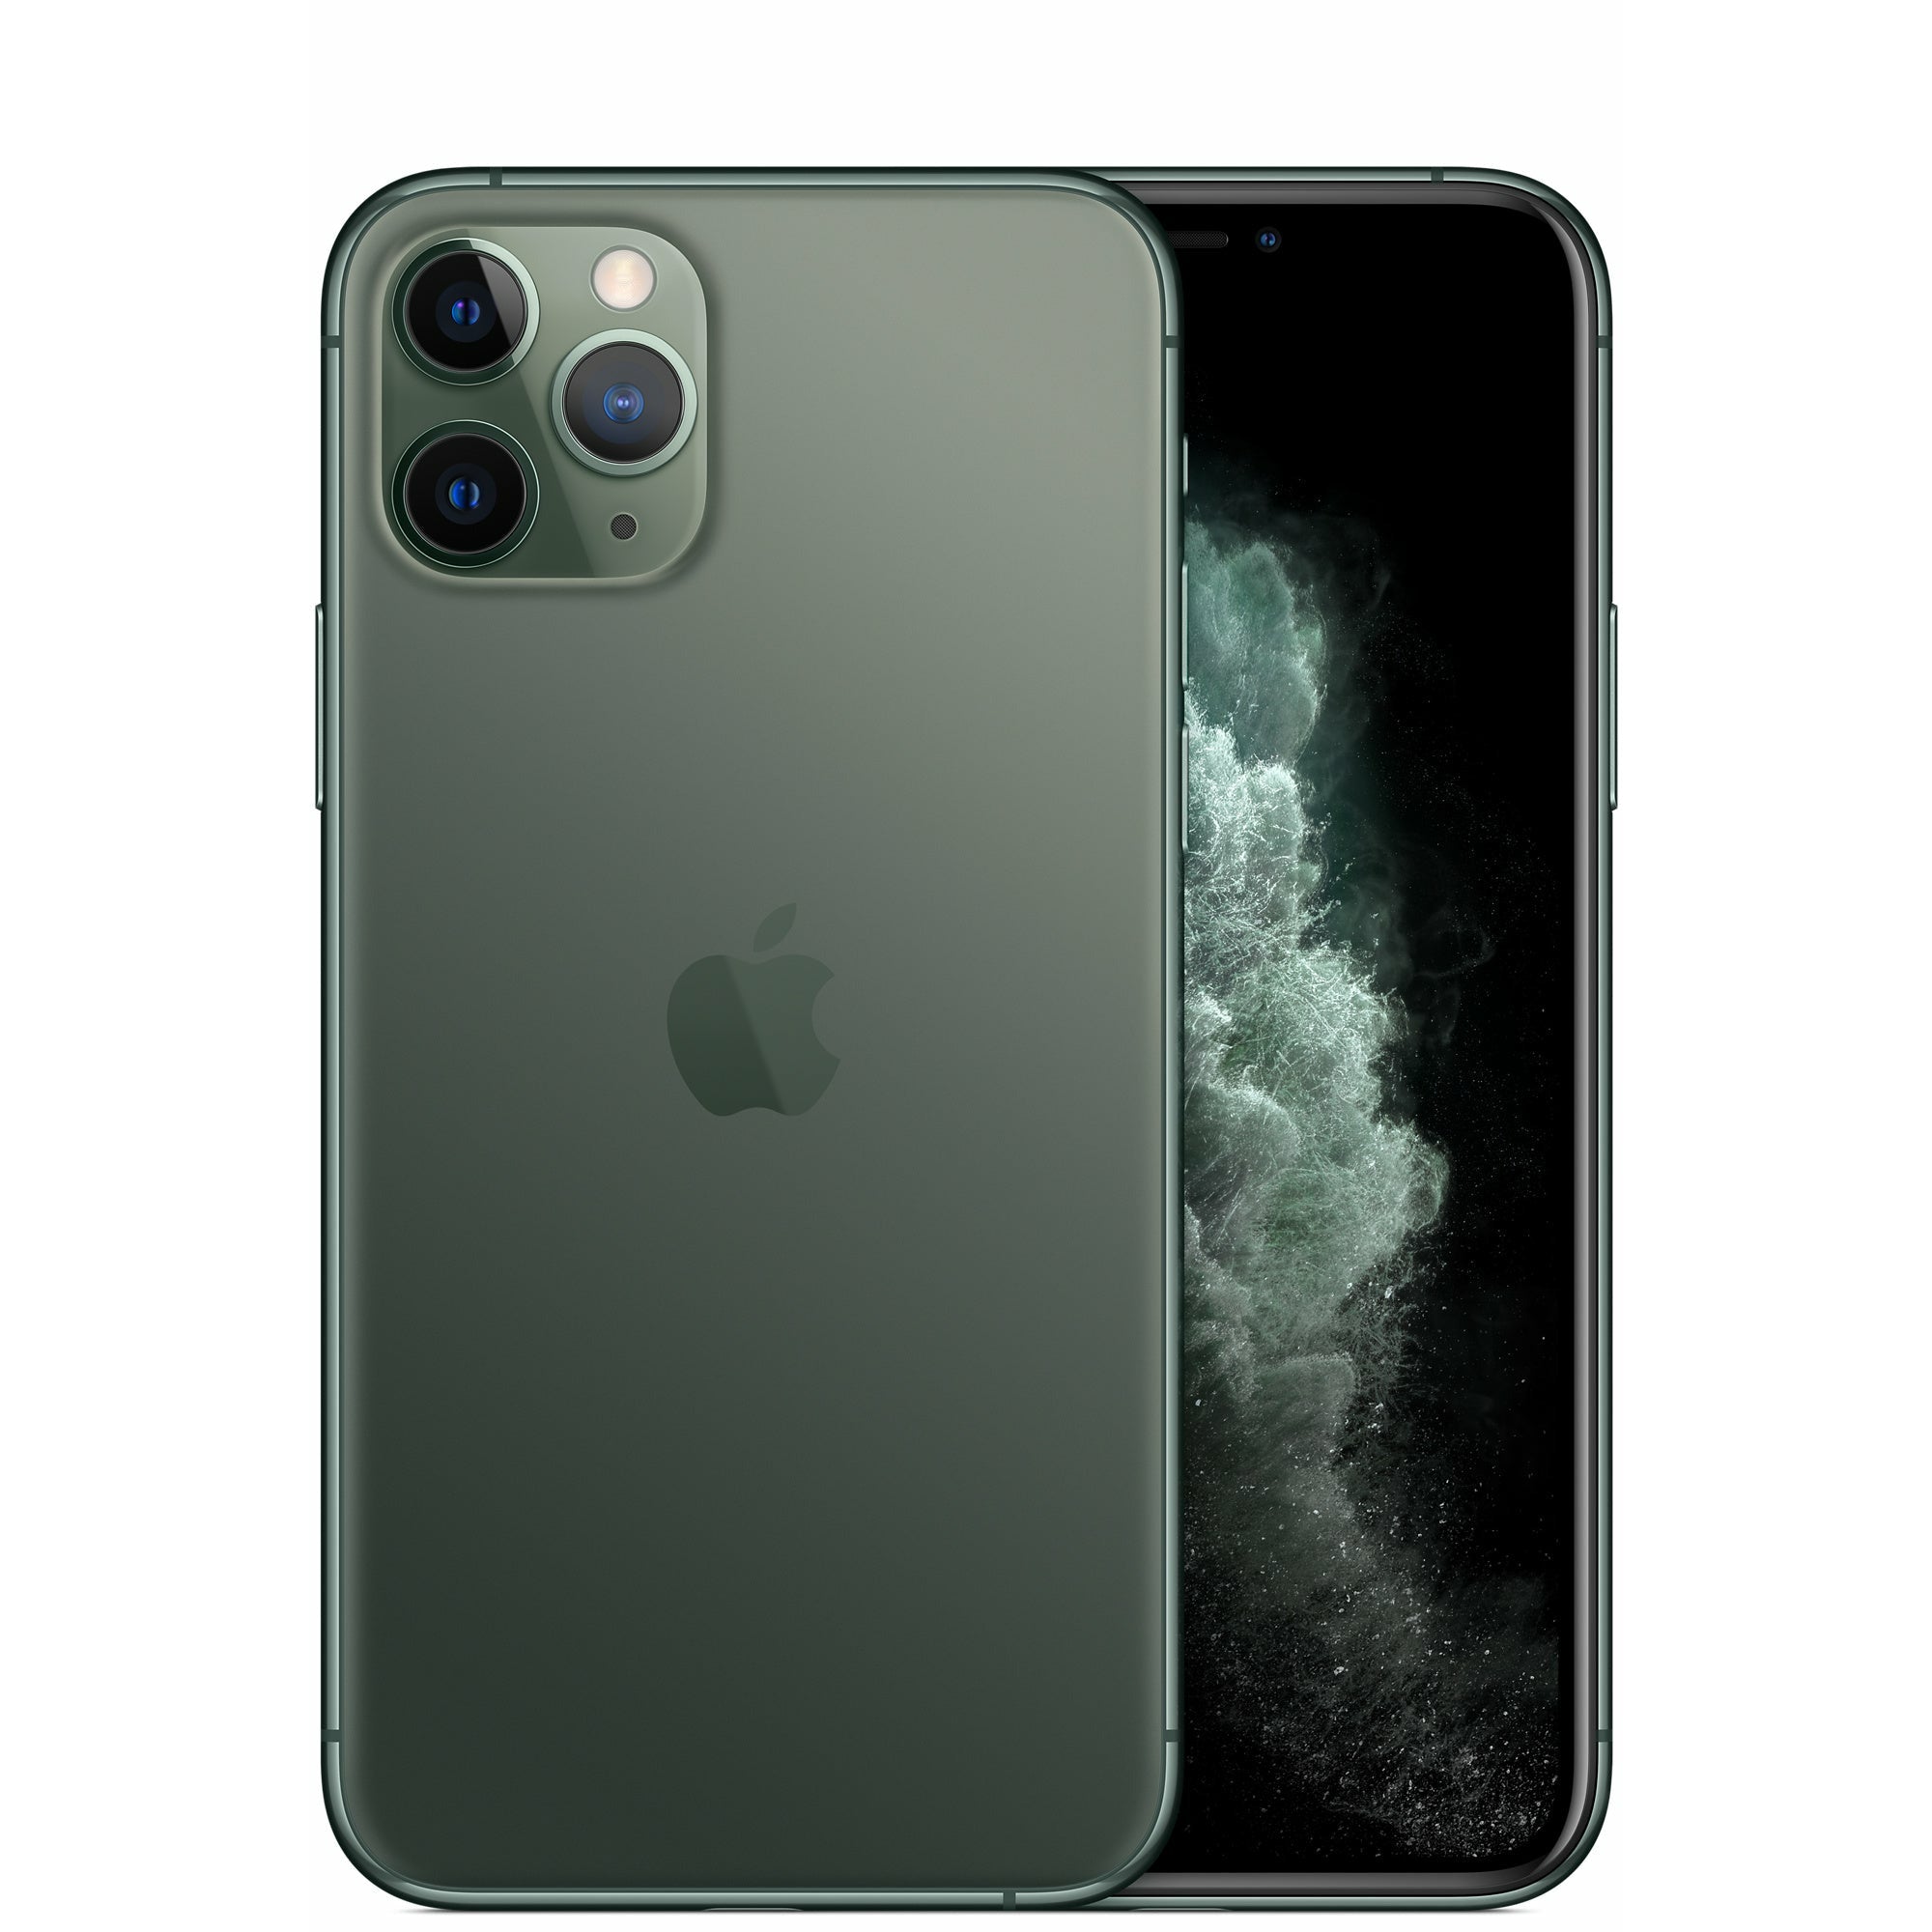 Apple iPhone 11 Pro - 64GB (Unlocked) - Midnight Green